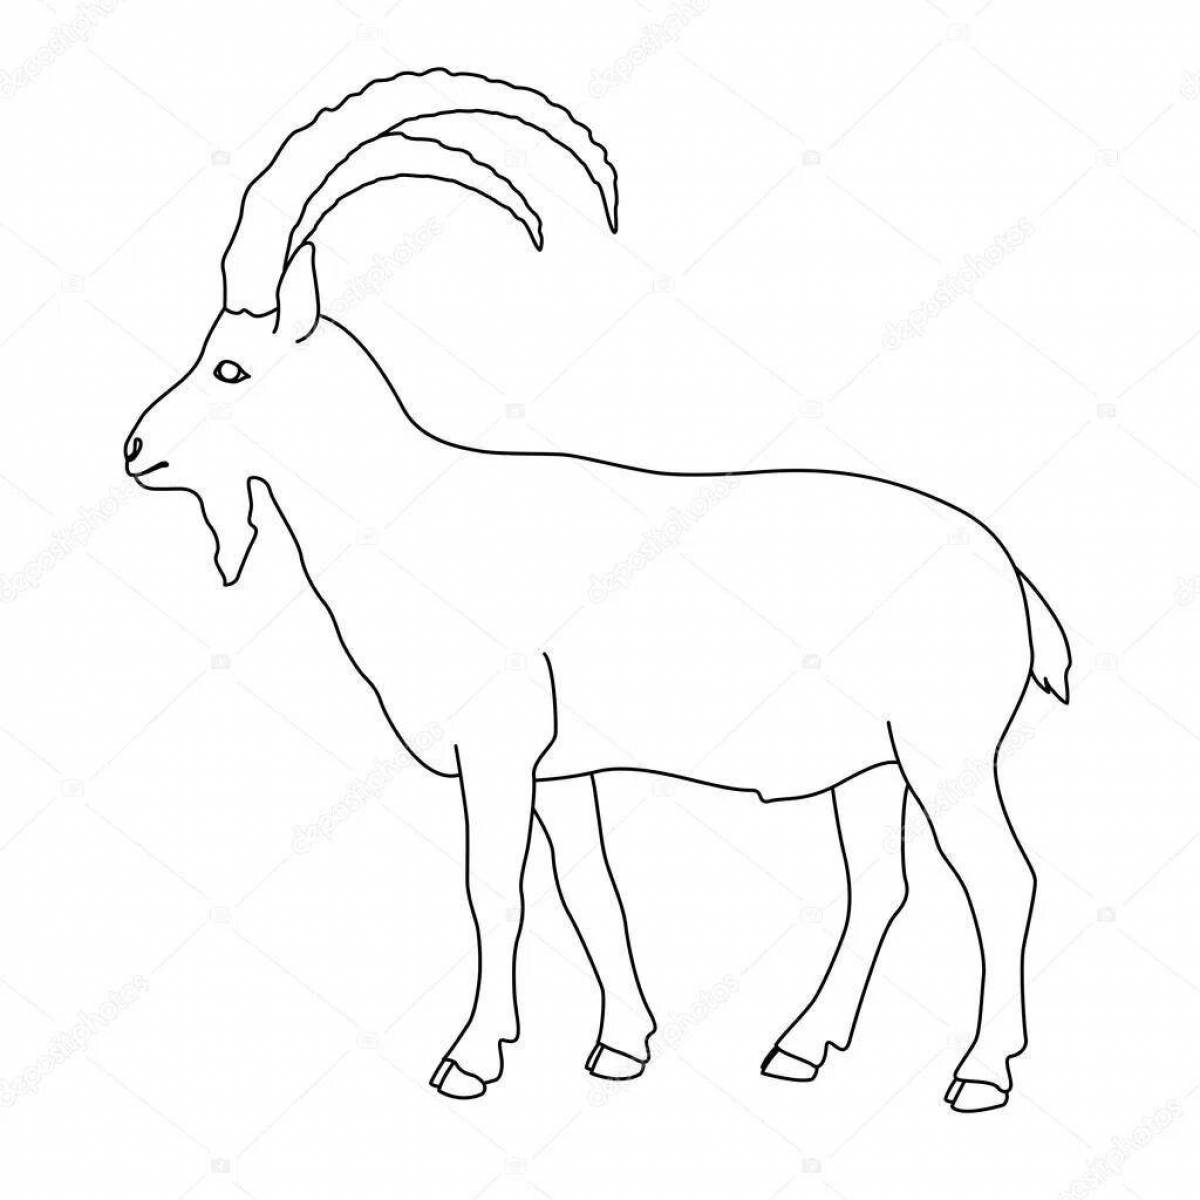 Coloring book nice mountain goat